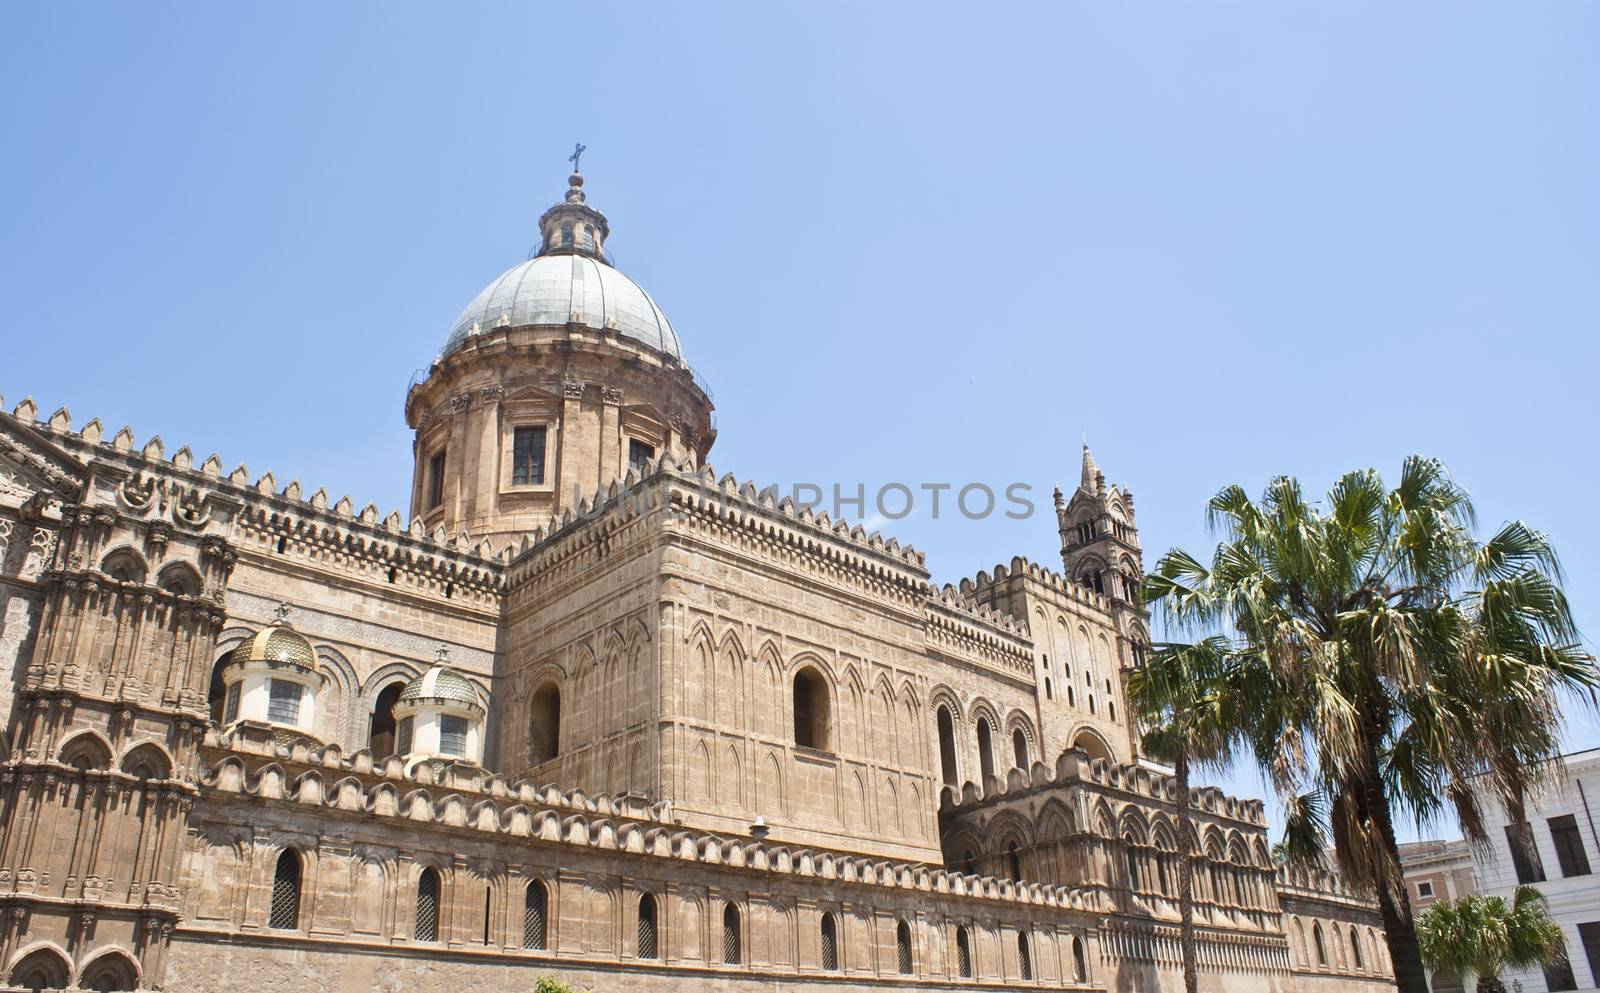 Cathedral of Palermo by gandolfocannatella